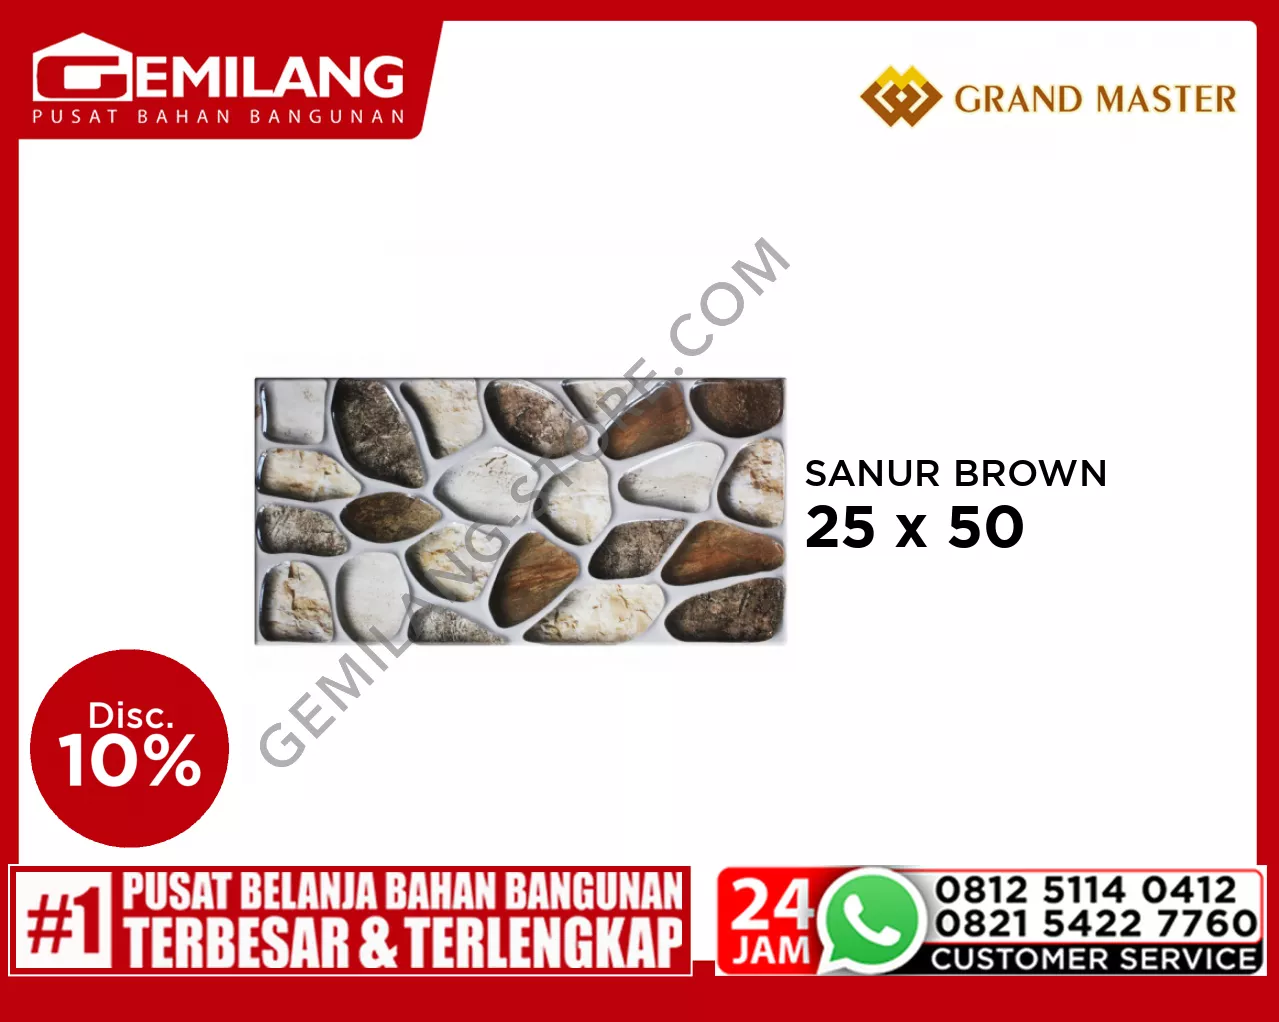 GRAND MASTER SANUR BROWN 25 x 50